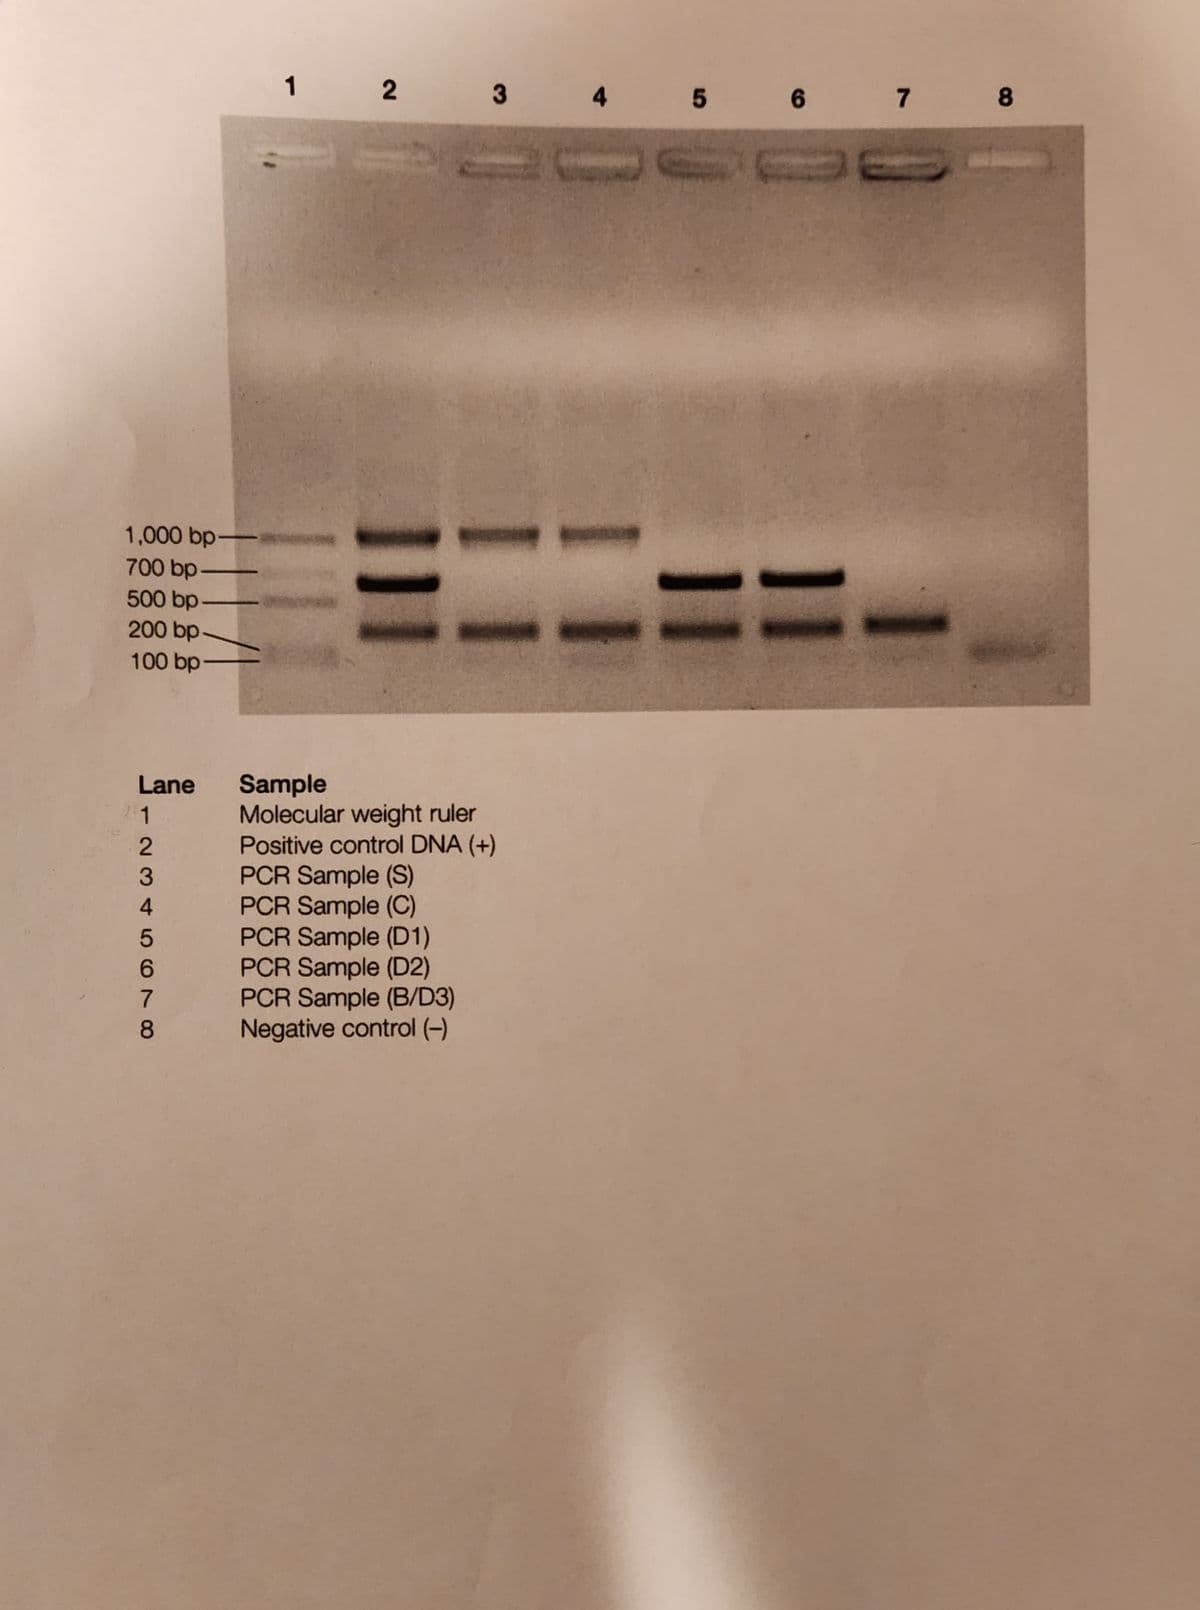 1,000 bp-
700 bp.
500 bp
200 bp.
100 bp-
Lane
12345678
6
8
Sample
Molecular weight ruler
Positive control DNA (+)
PCR Sample (S)
PCR Sample (C)
PCR Sample (D1)
PCR Sample (D2)
PCR Sample (B/D3)
Negative control (-)
1 2
3
4 5 6 7 8
I
1
I I